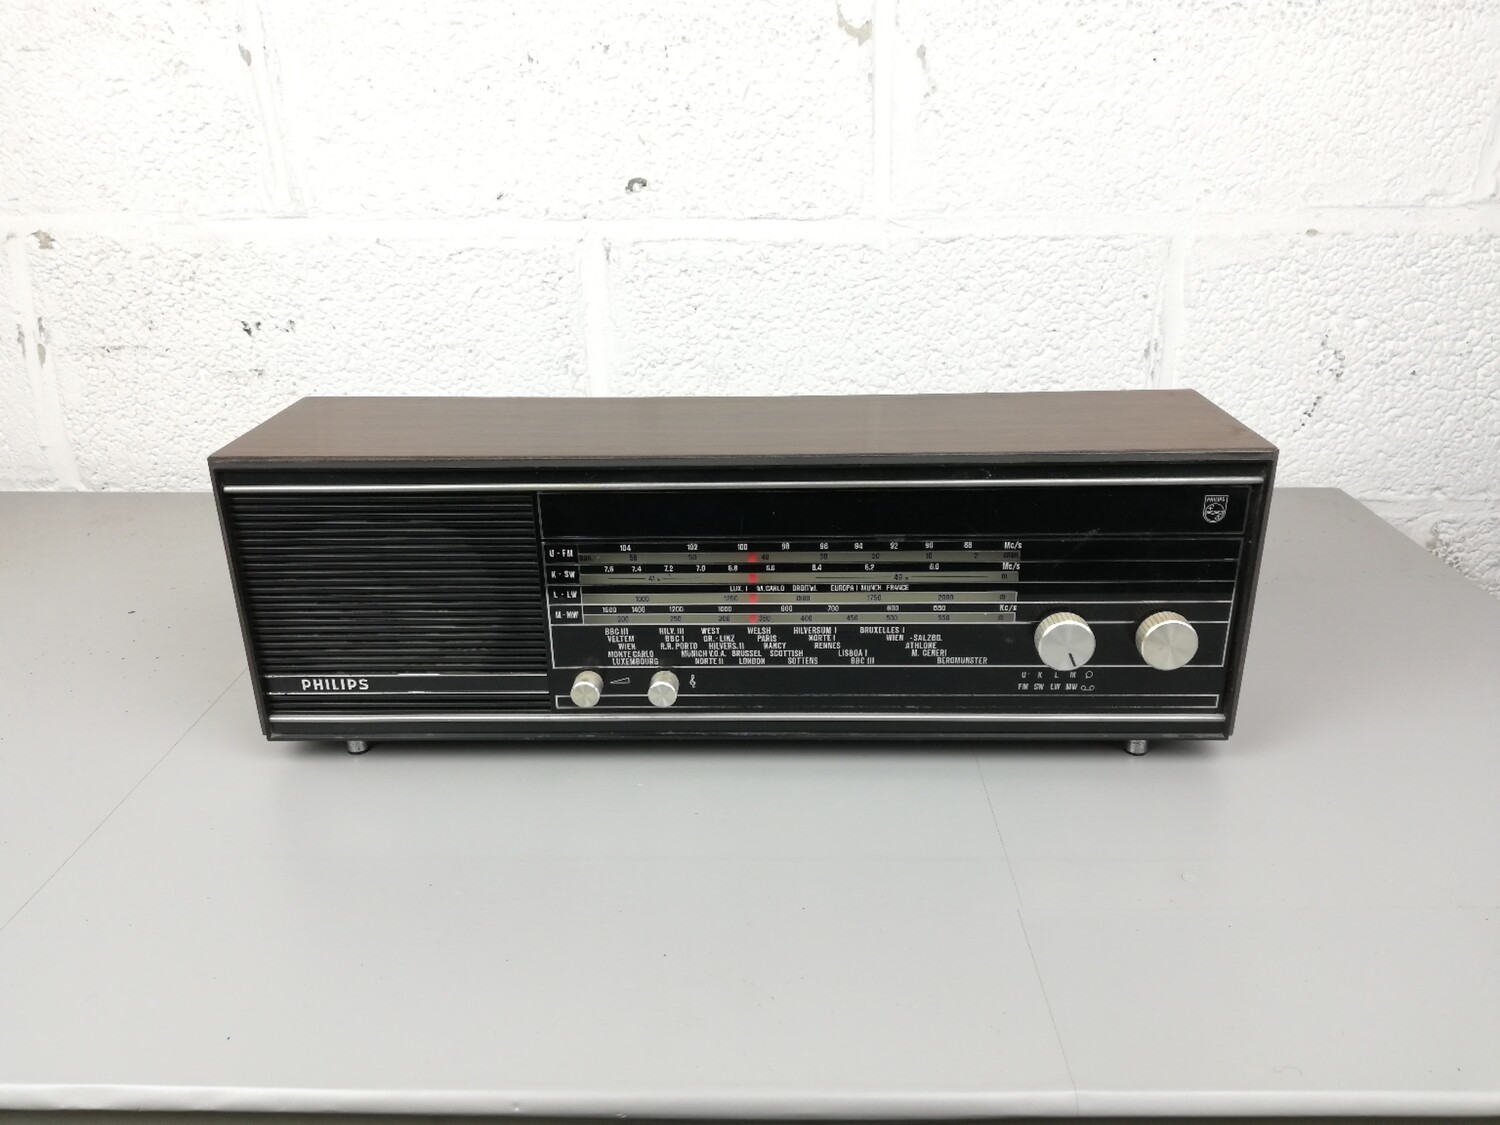 Philips 22RB382/OOZ radio